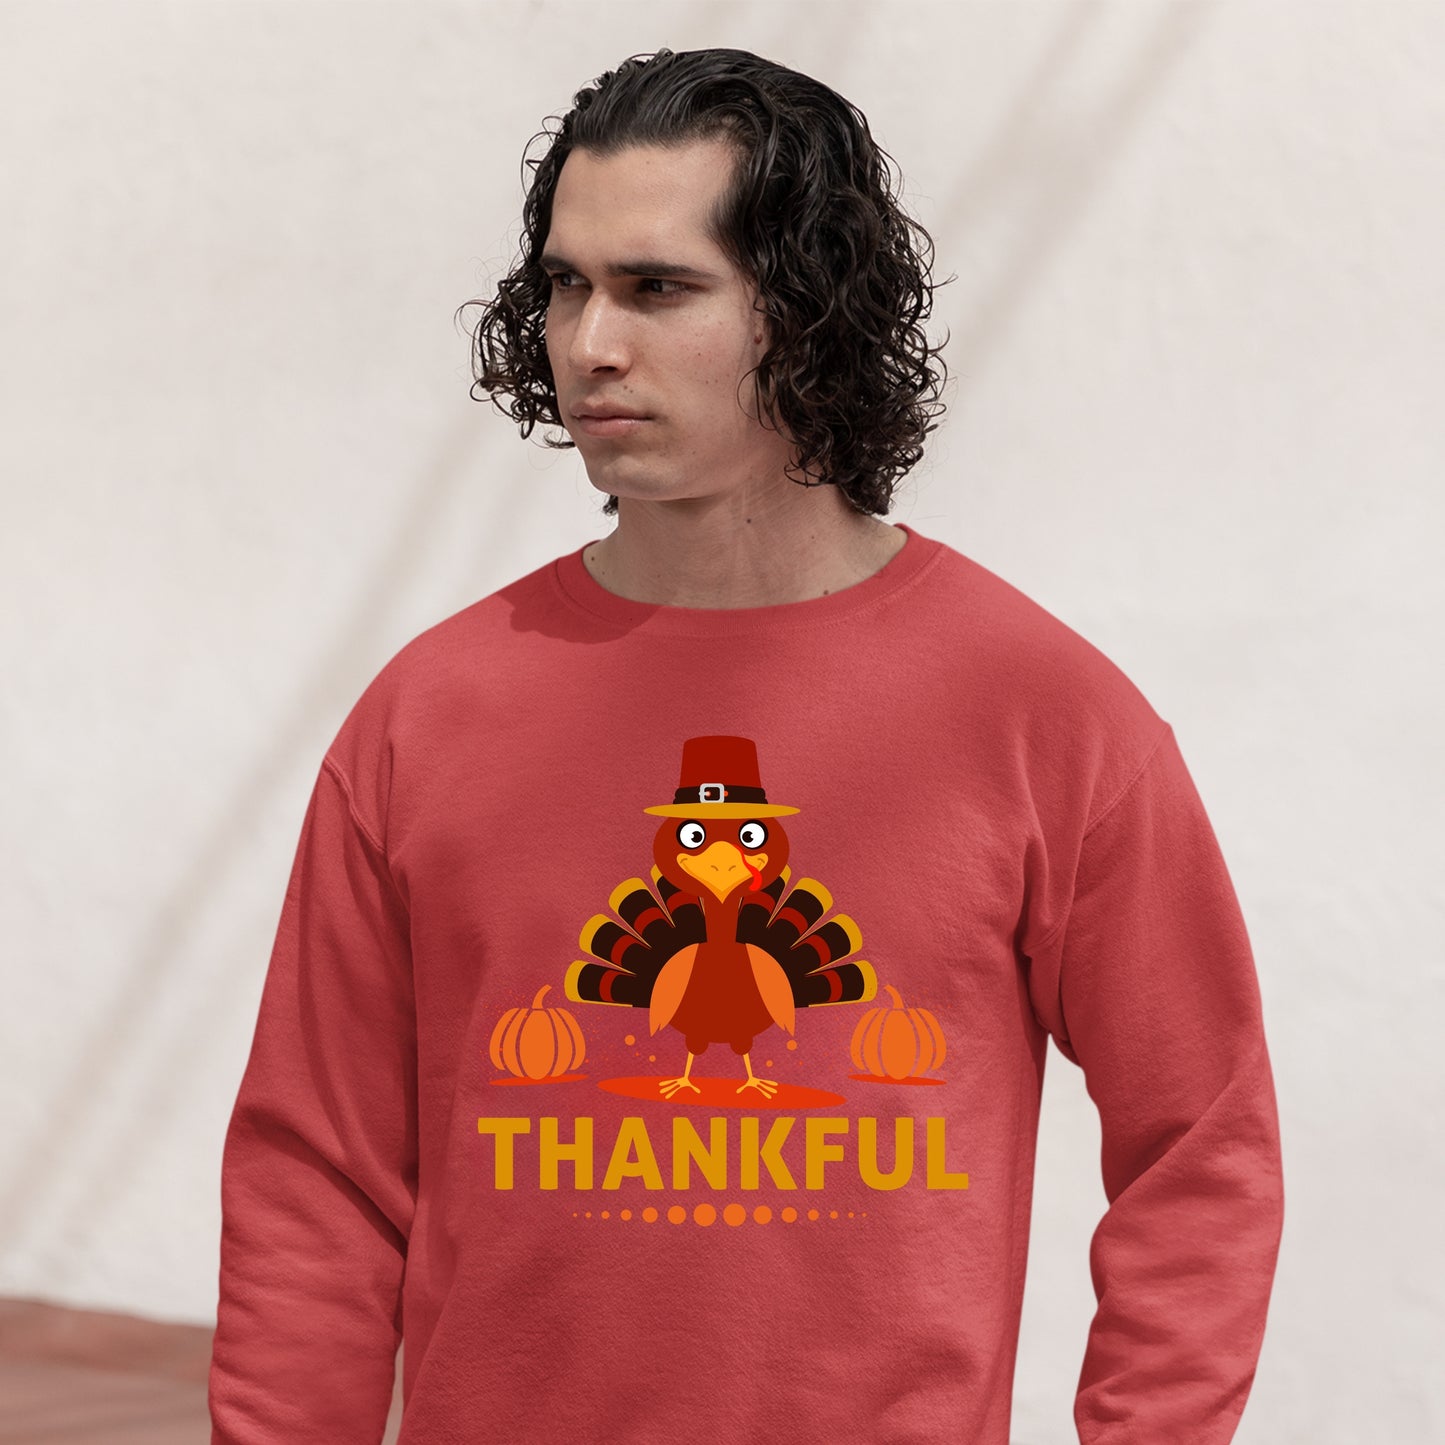 Thanksgiving Thankful Sweatshirt, Thanksgiving Sweater for Men, Thanksgiving Sweater for Women, Thanksgiving Gift Ideas, Cute Thanksgiving